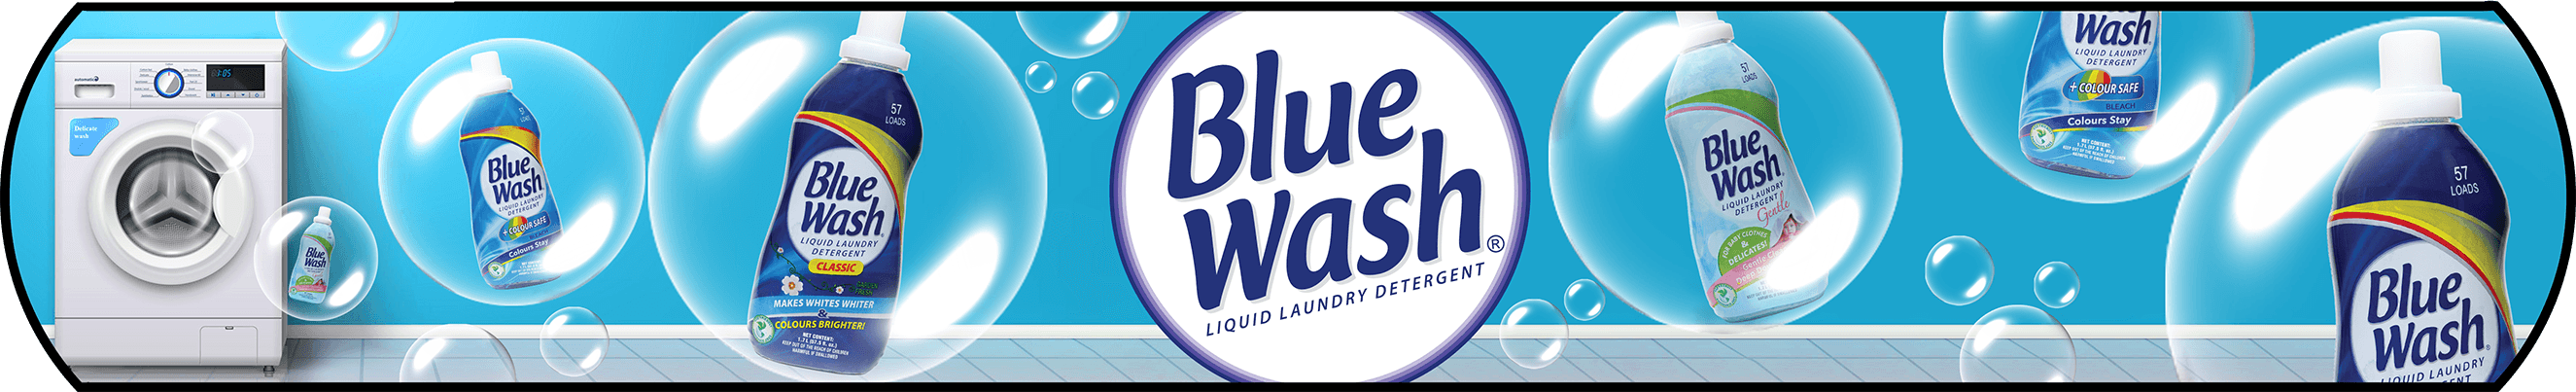 Blue Wash Banner